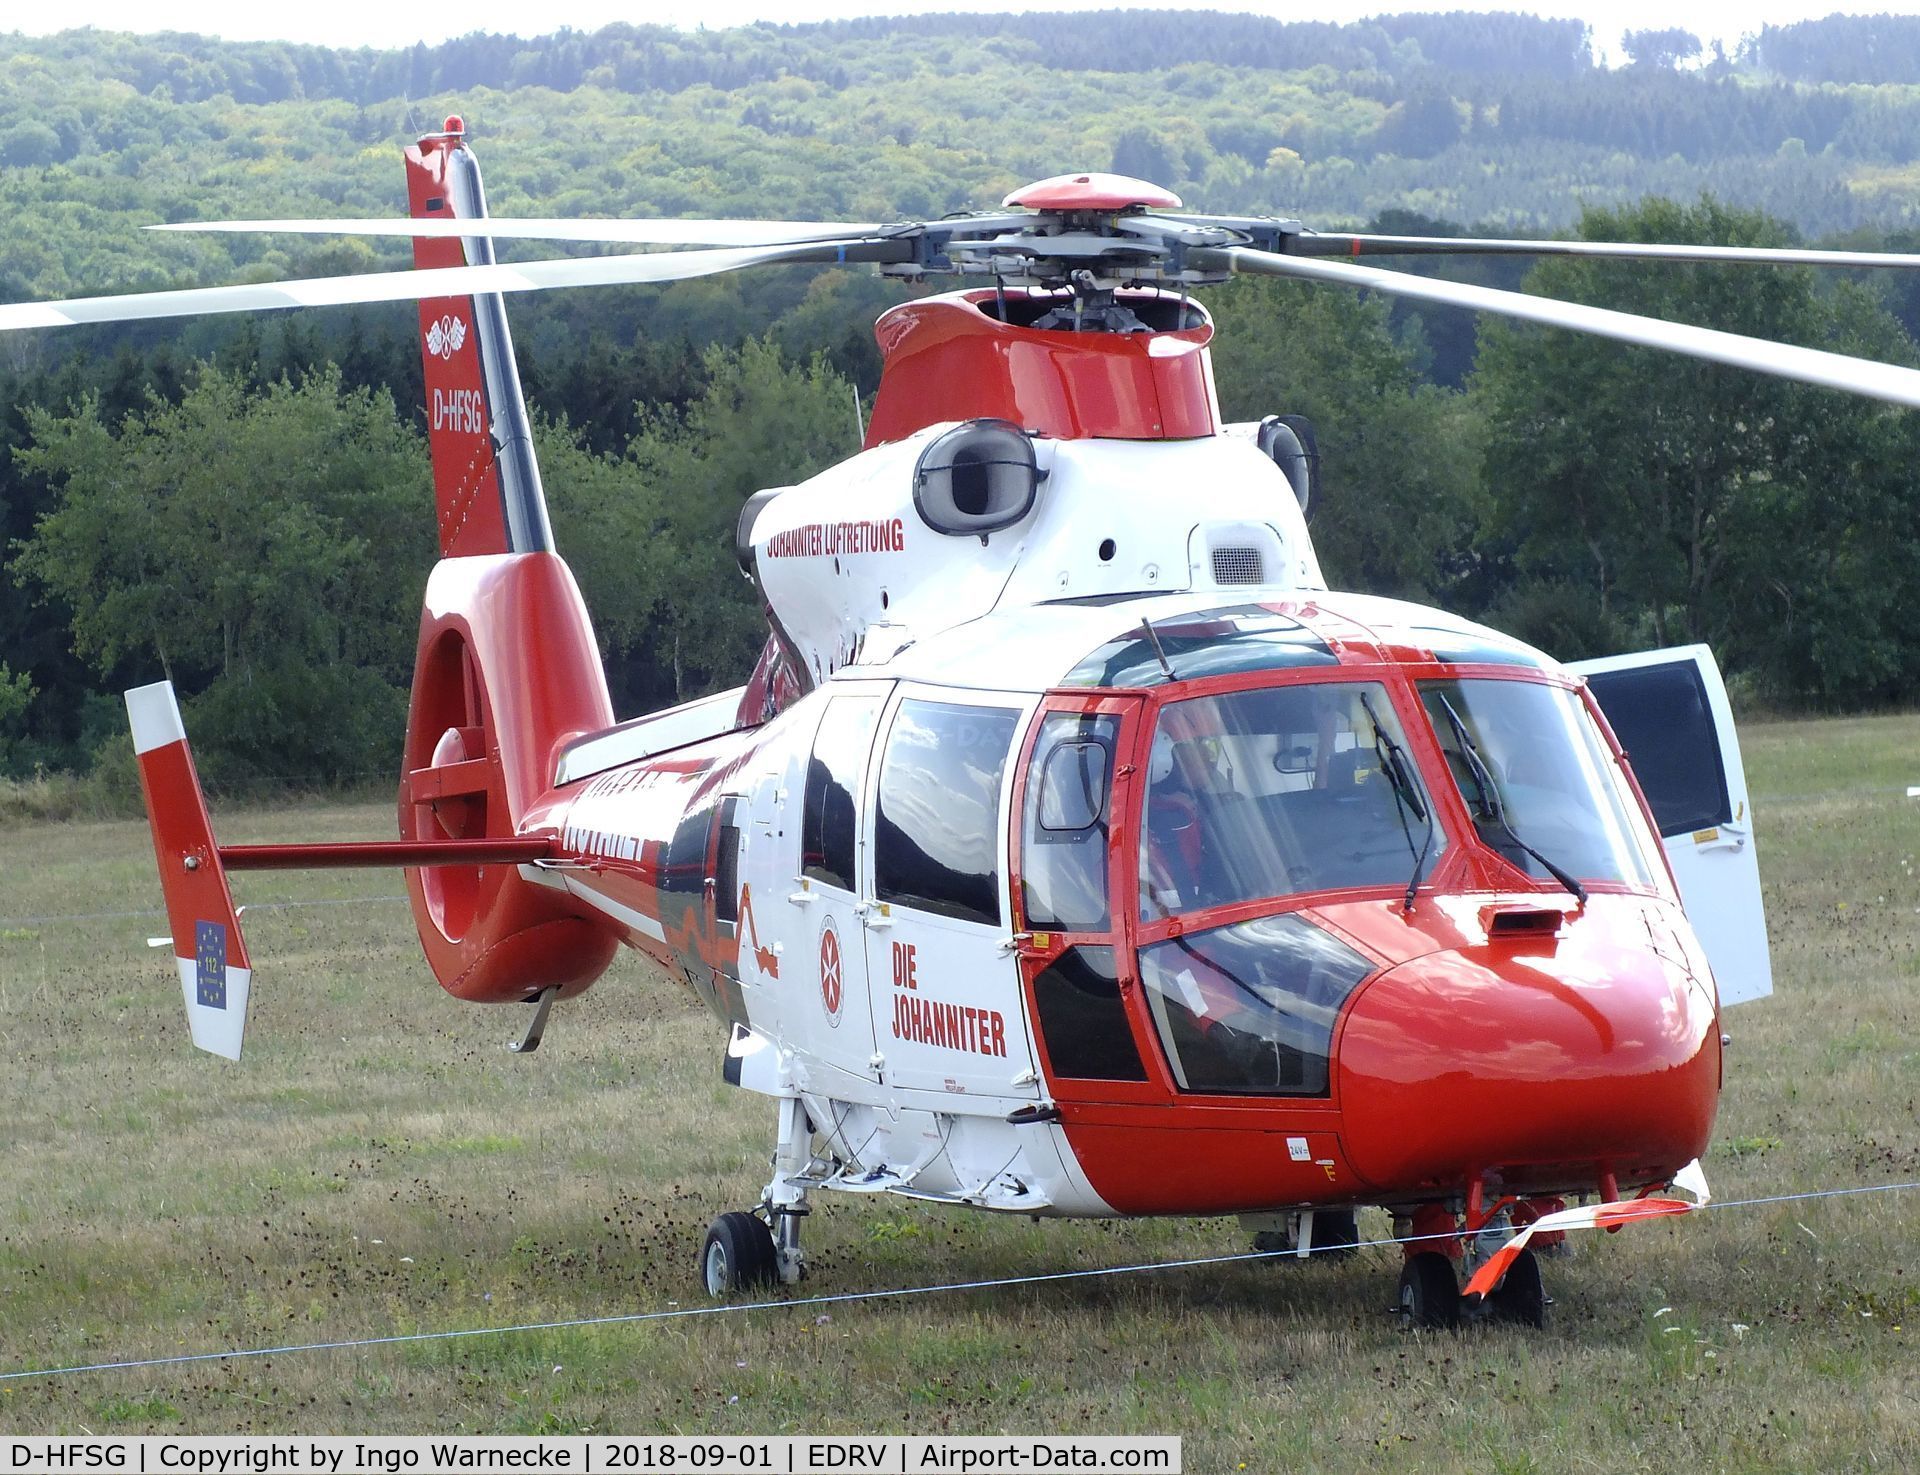 D-HFSG, 2003 Eurocopter AS-365N-3 Dauphin 2 C/N 6649, Eurocopter AS.365N-3 Dauphin 2 of the Johanniter Rettungsdienst EMS at the 2018 Flugplatzfest Wershofen